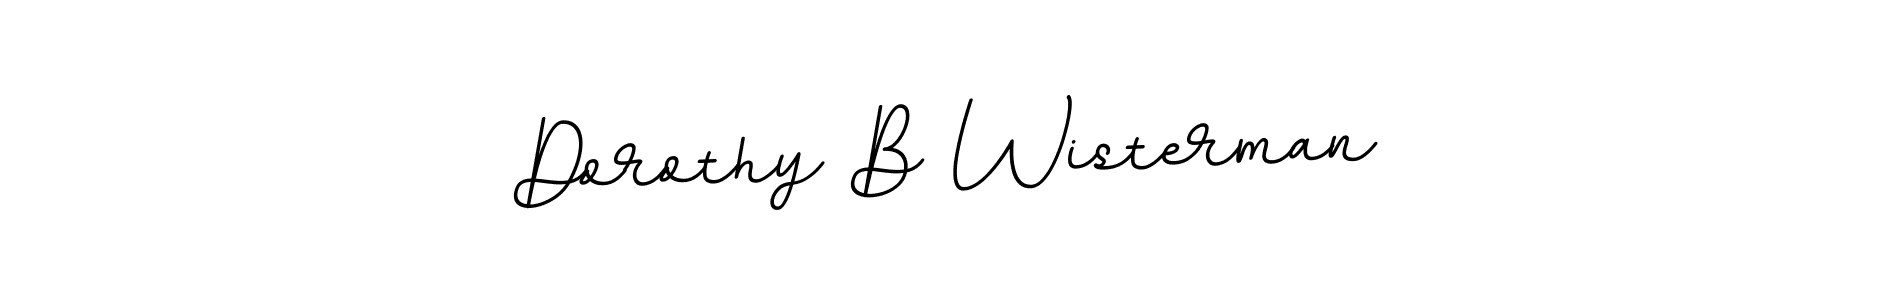 How to Draw Dorothy B Wisterman signature style? BallpointsItalic-DORy9 is a latest design signature styles for name Dorothy B Wisterman. Dorothy B Wisterman signature style 11 images and pictures png